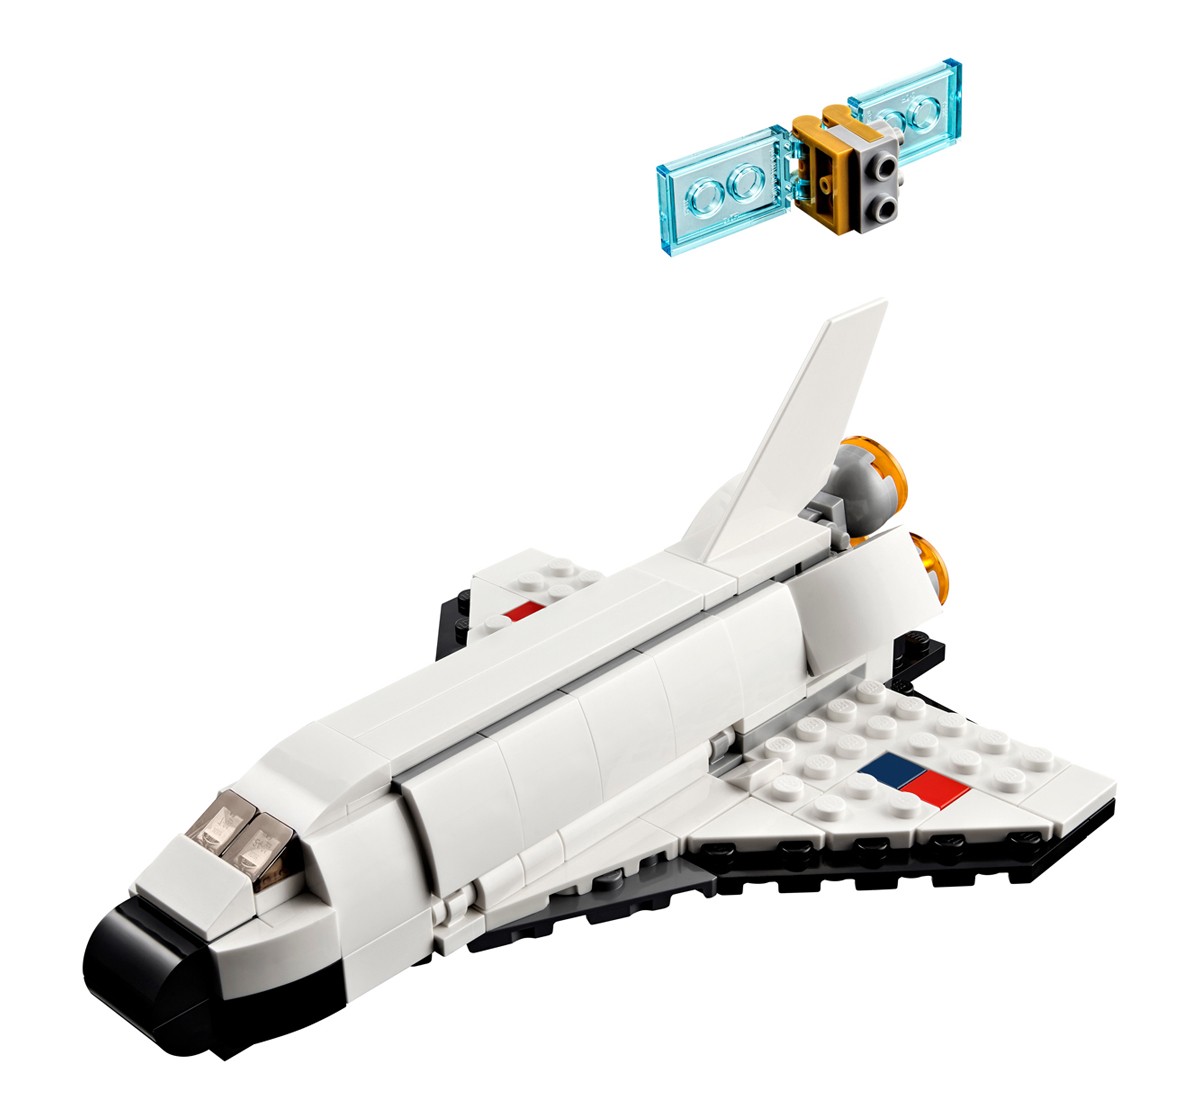 LEGO Creator Space Shuttle 31134 Building Toy Set 144 Pieces Multicolour 6Y+